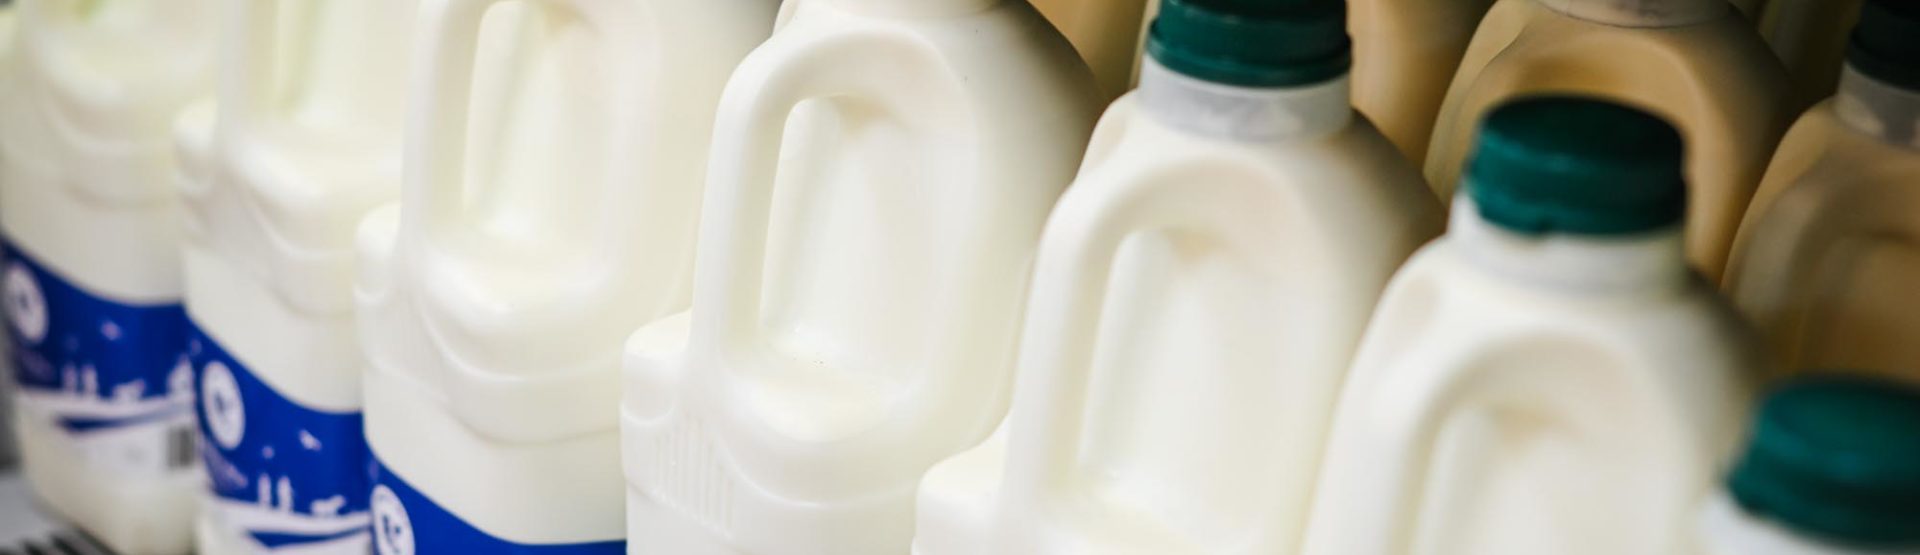 Unhomogenised and pasteurised bottles of British milk